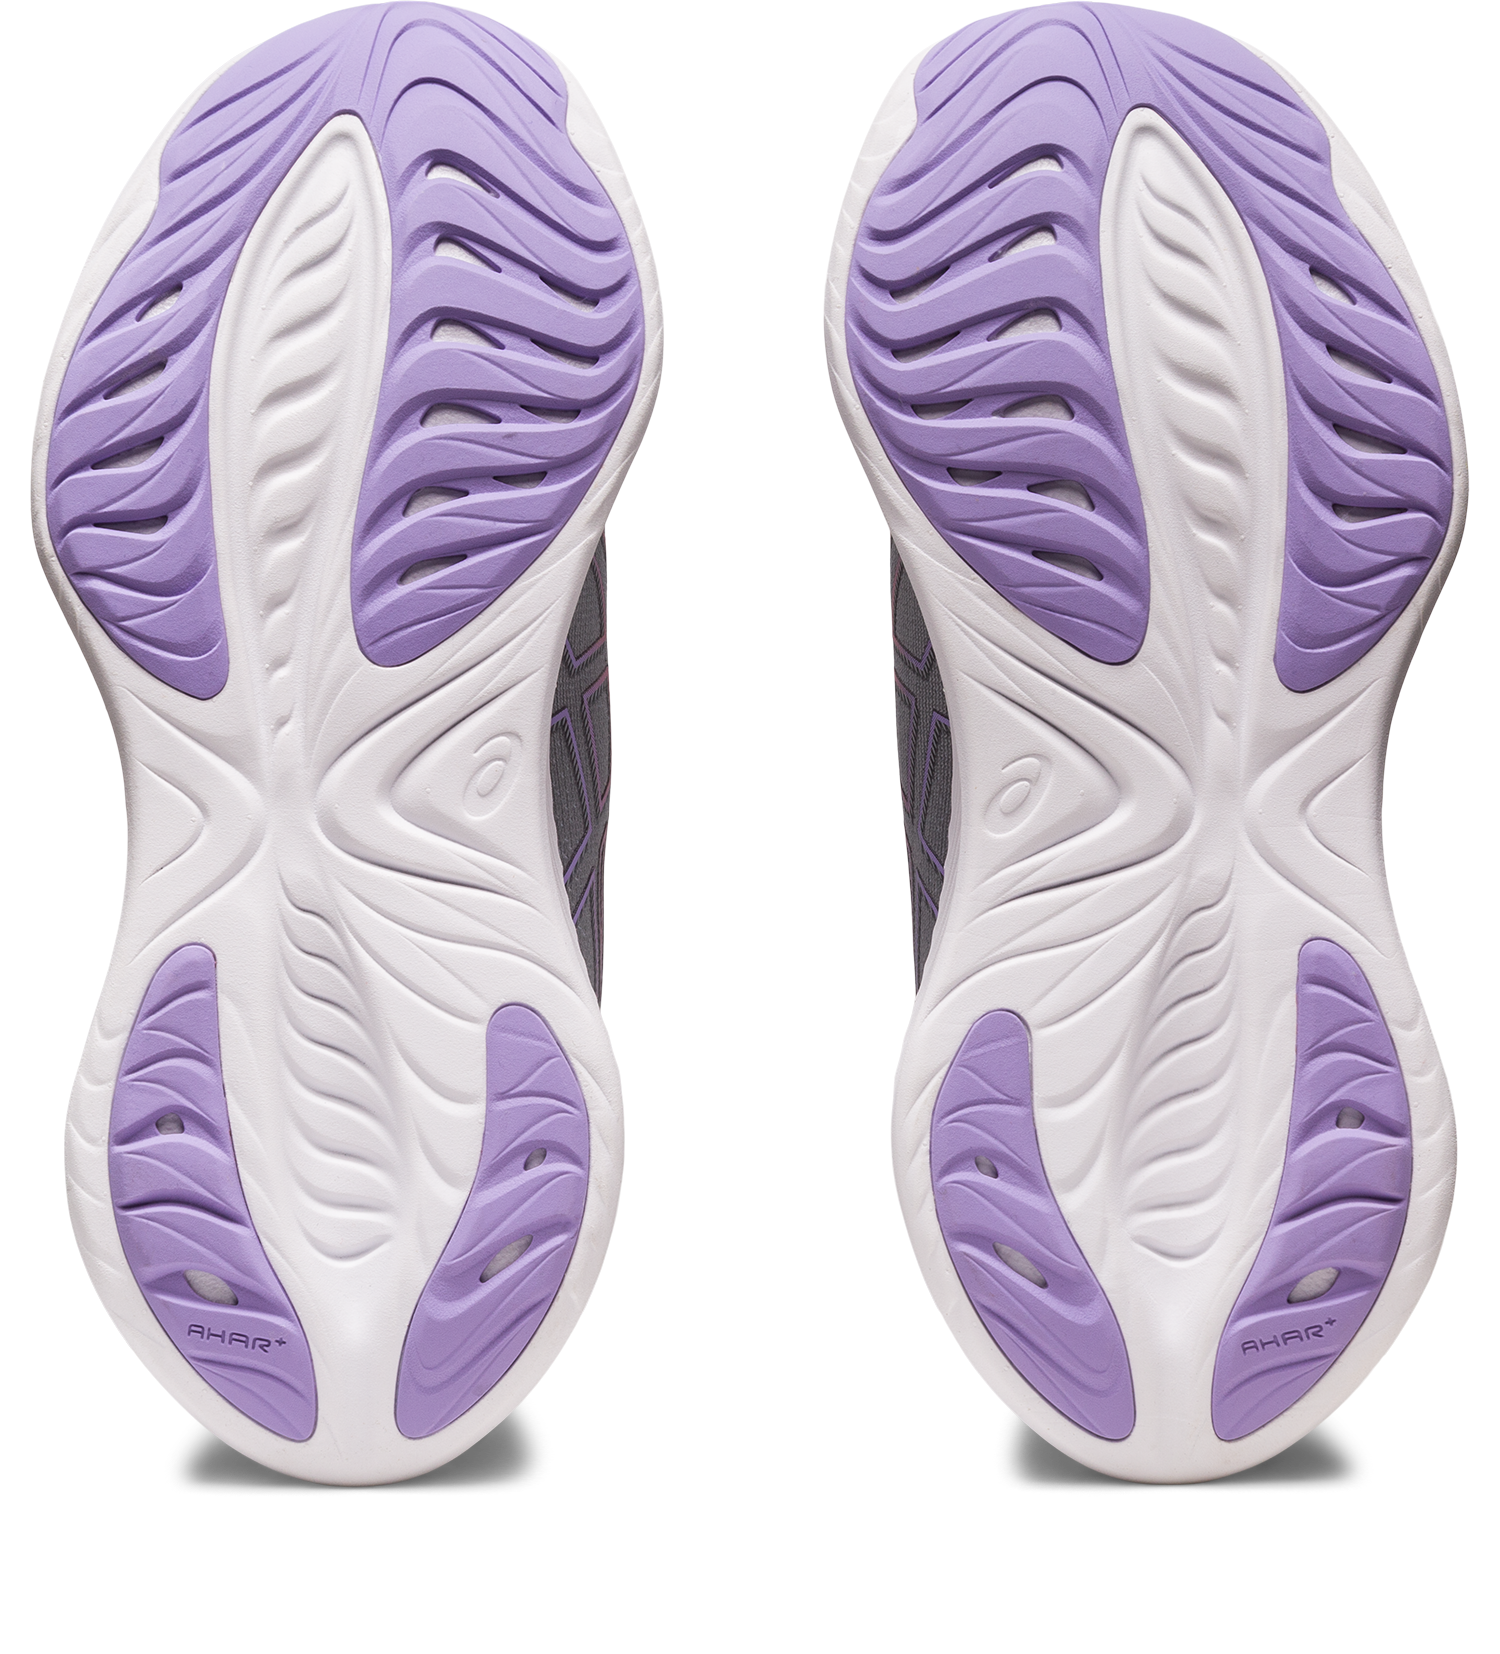 Asics Women's Gel-Cumulus 25 Wide (D) Running Shoes in Sheet Rock/Papaya